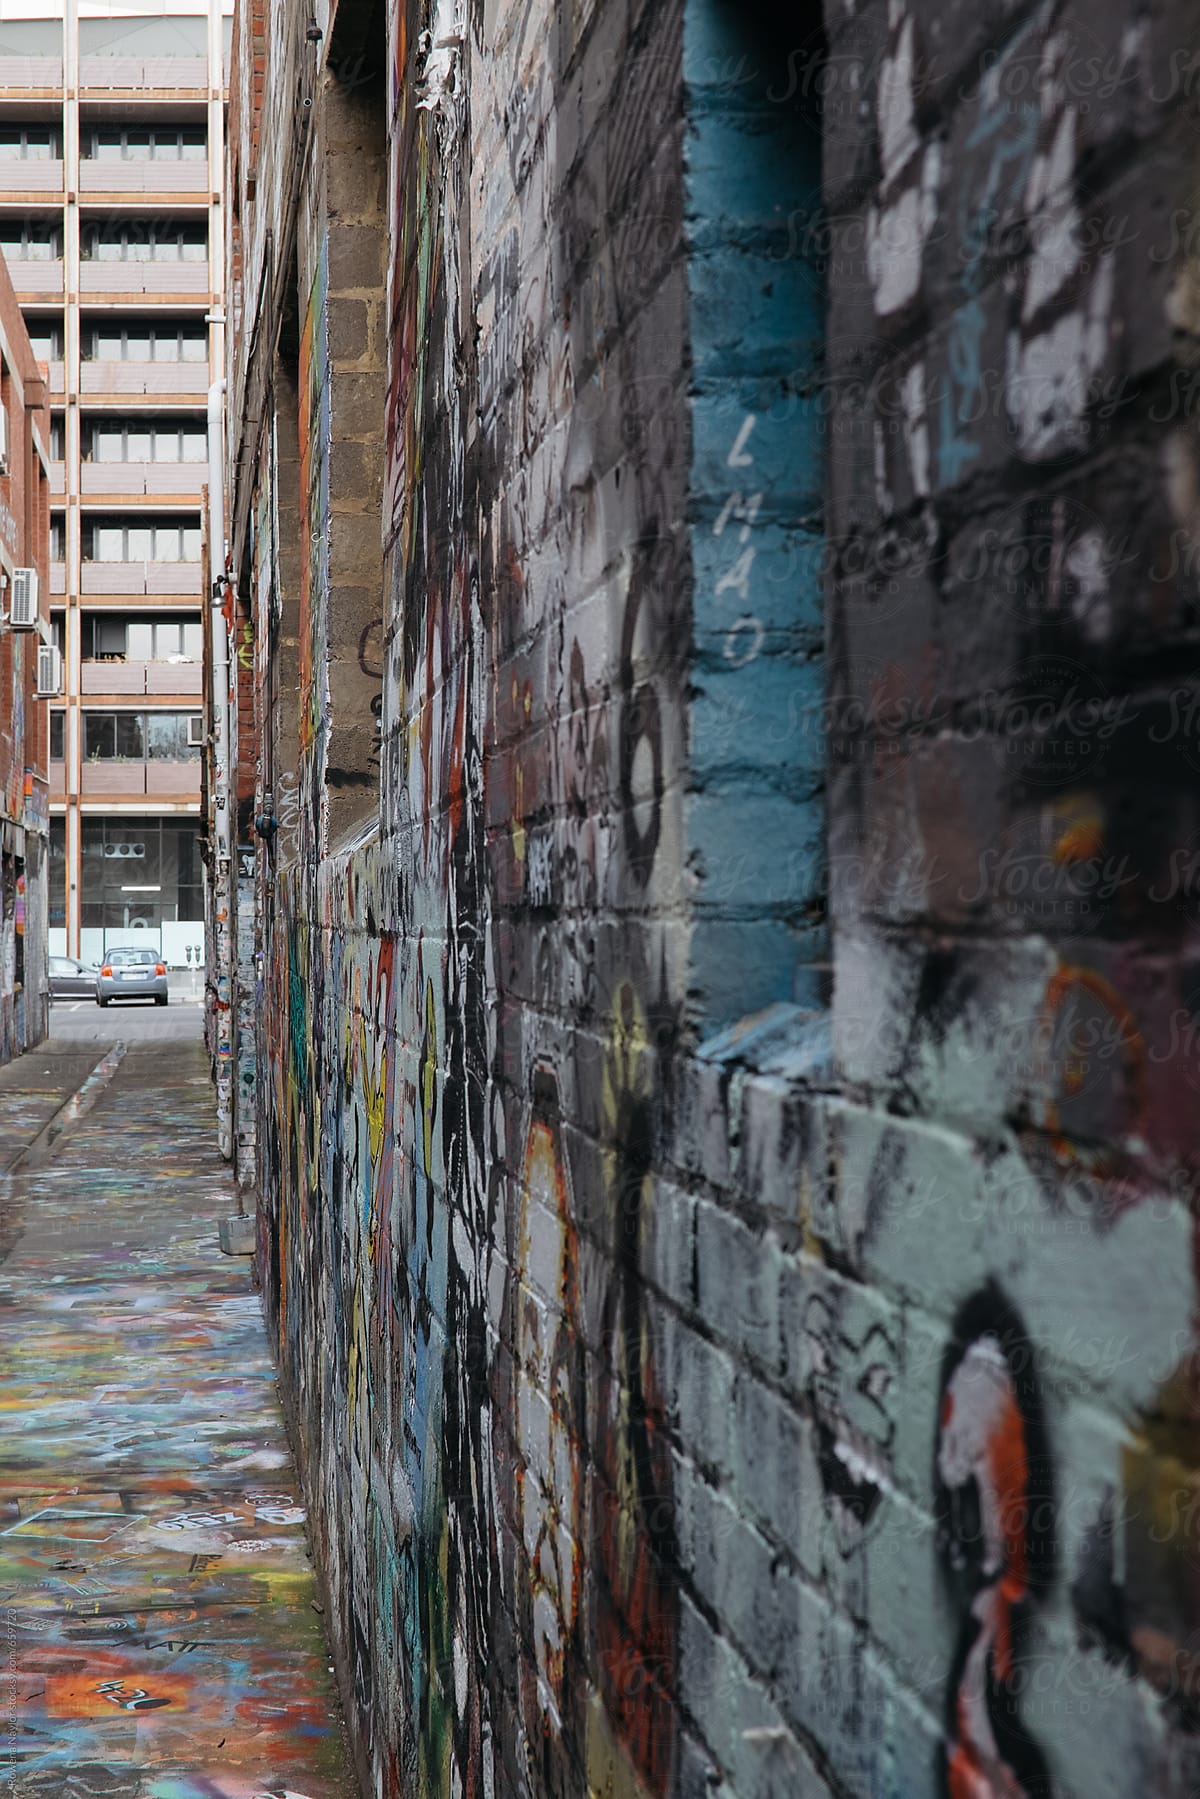 Painted laneway in inner city